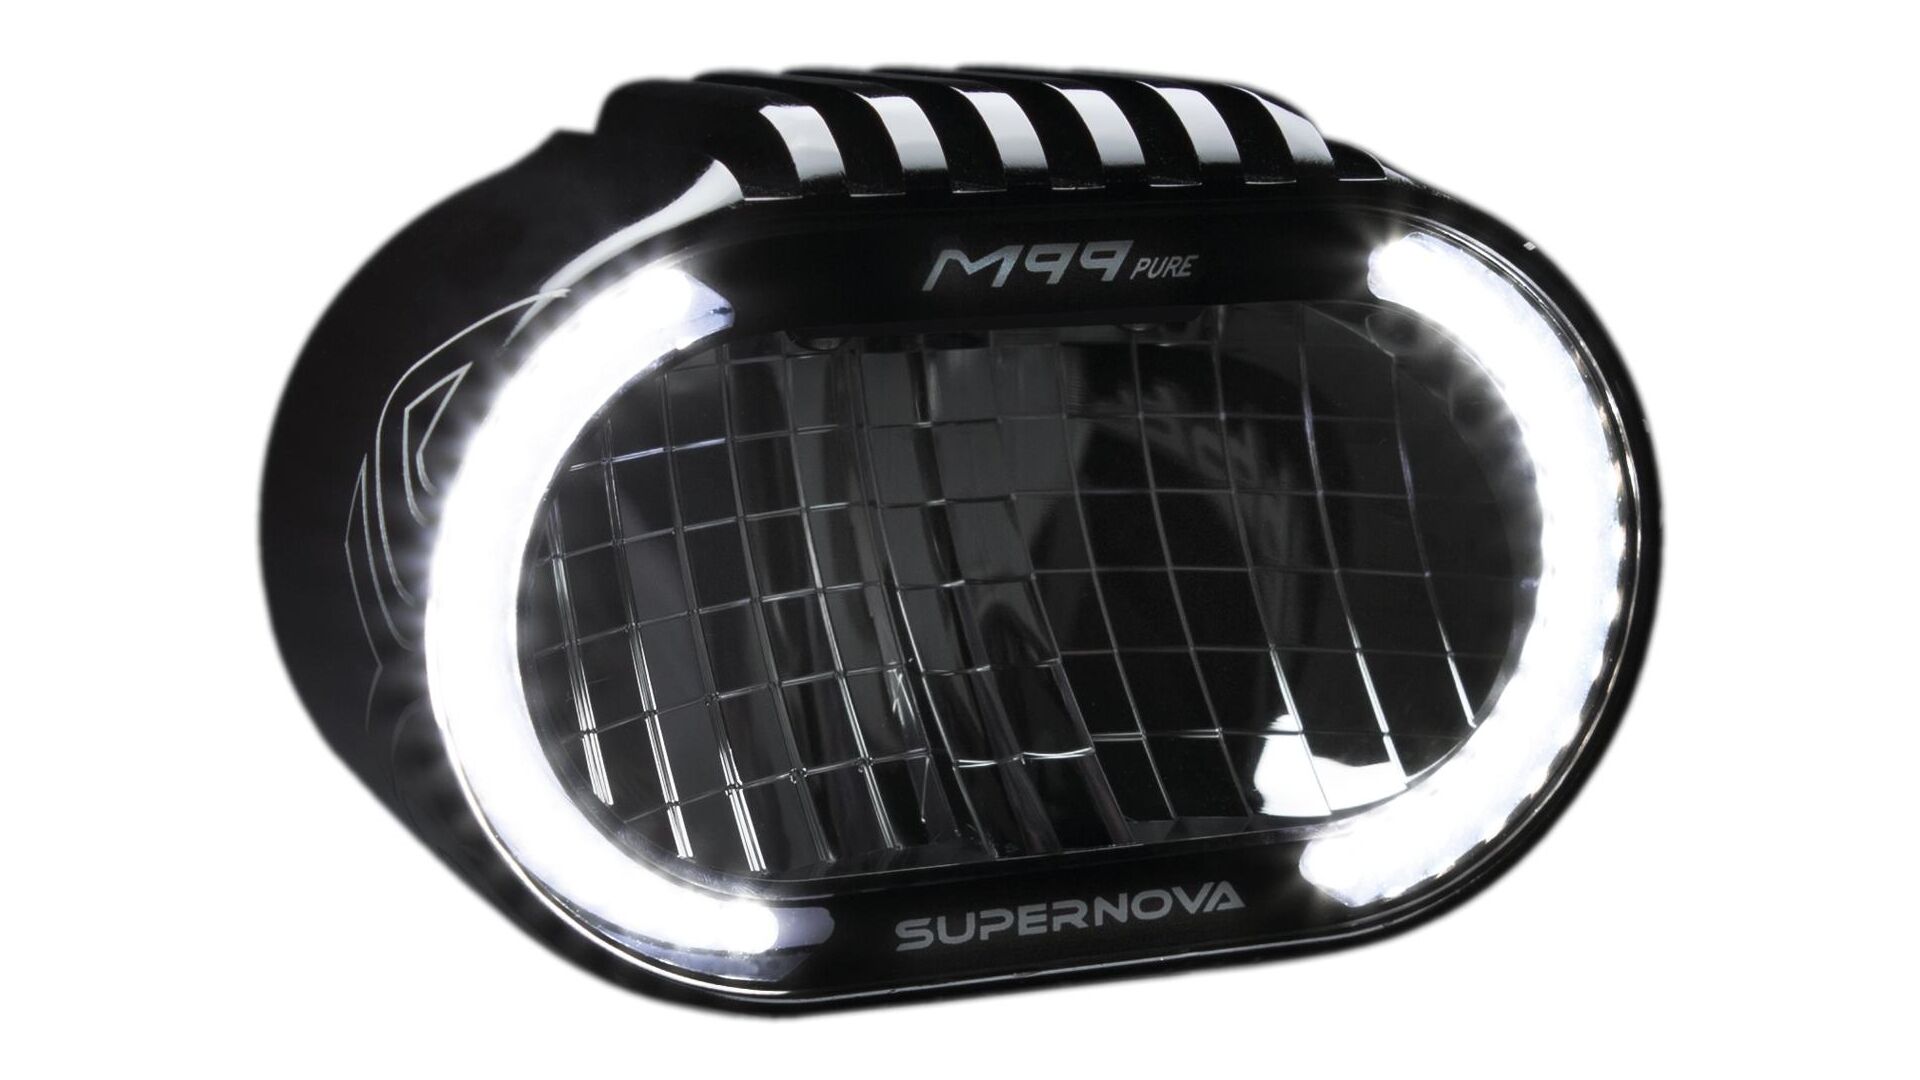 Supernova LED-Scheinwerfer M99-Pure